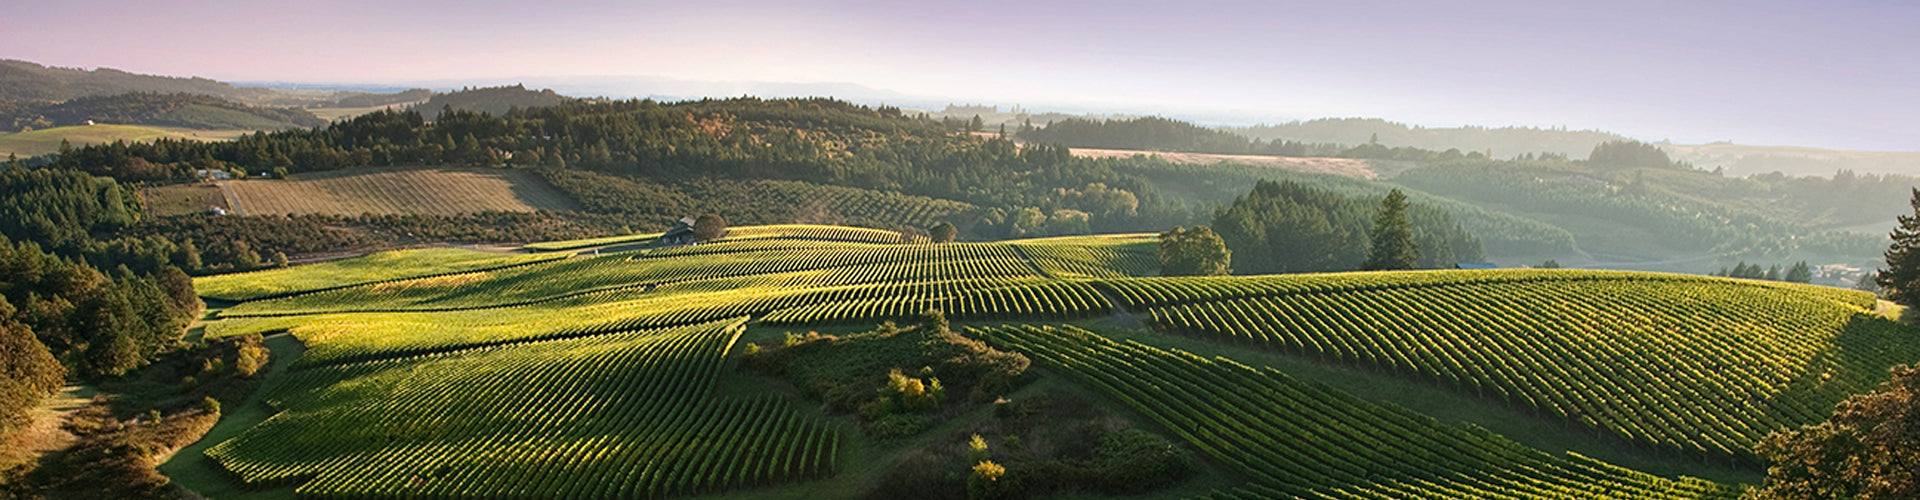 Shea Vineyards in Oregon, Pacific Northwest of America